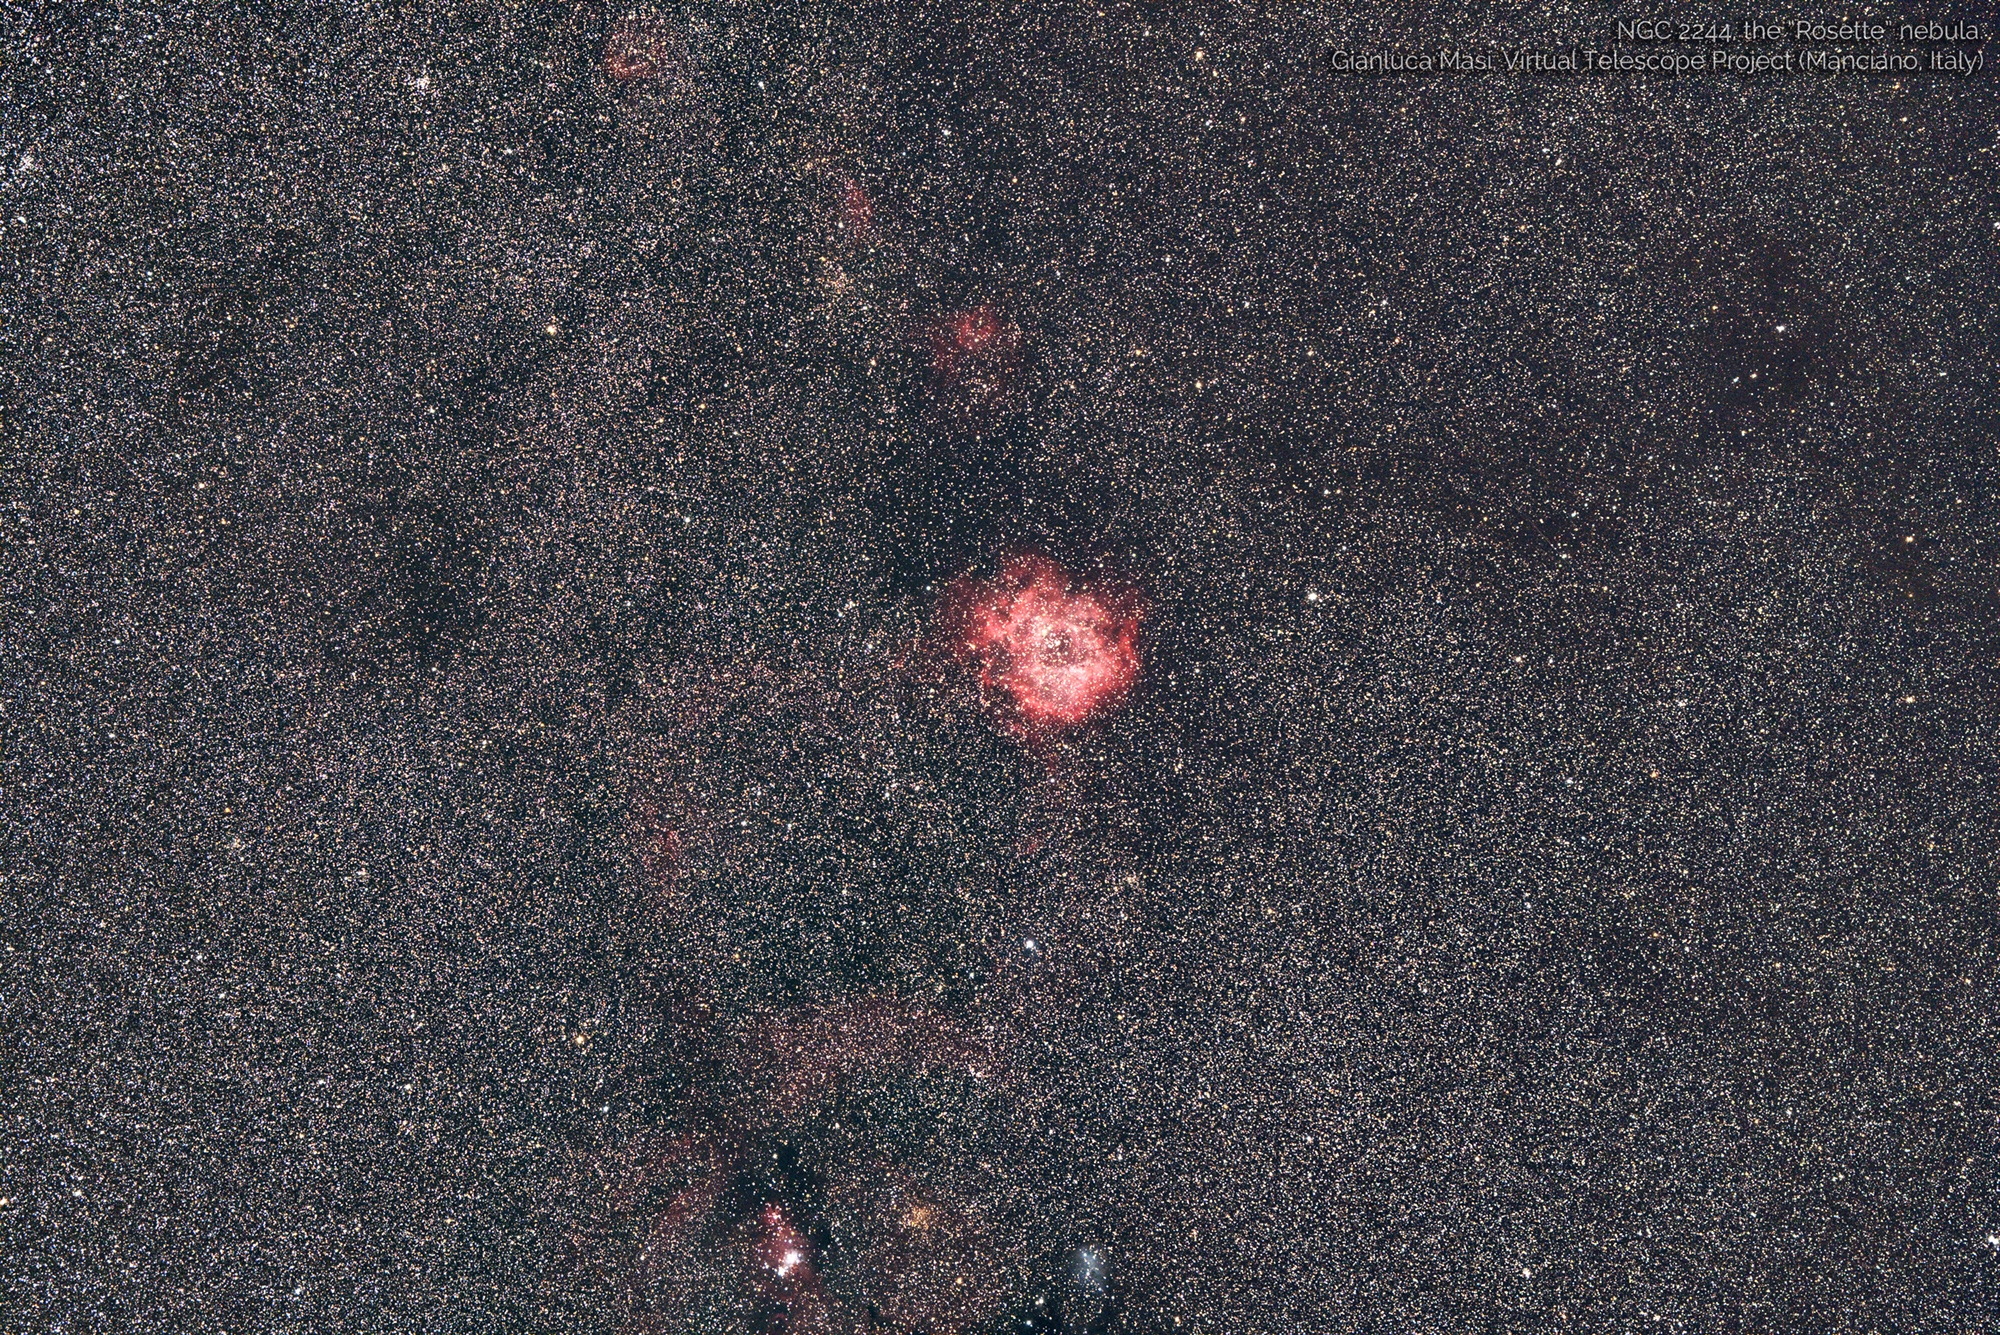 The Rosette Nebula (NGC 2237) and surrounding region.